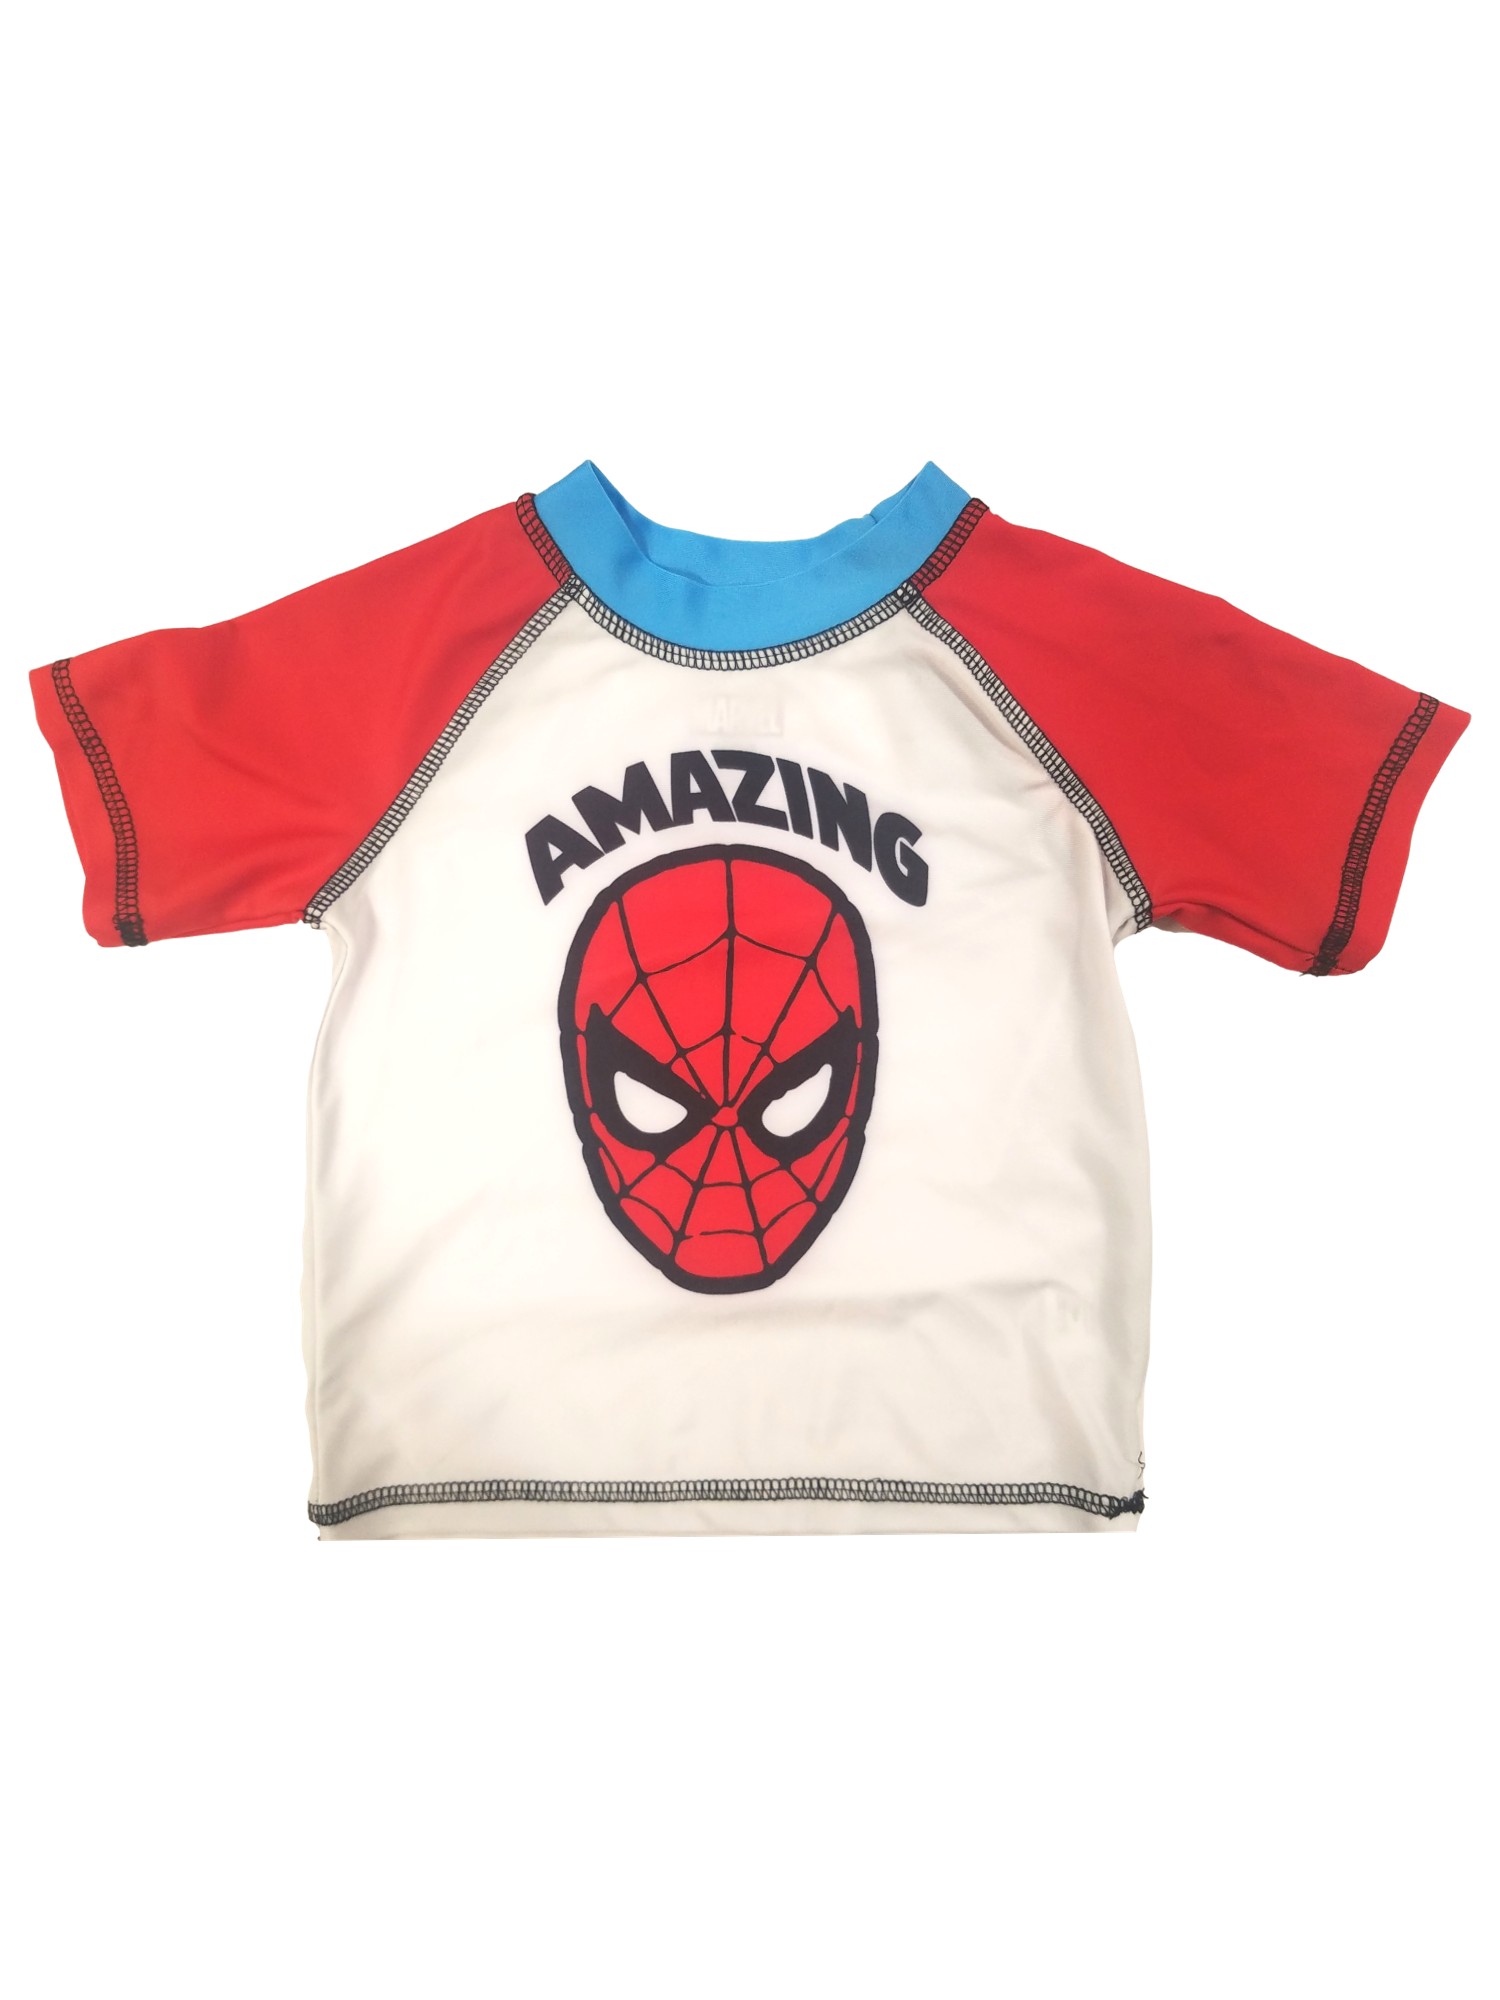 Disney Marvel Infant Boys Red, White & Blue Spiderman Rash Guard Swim Shirt 18 Months